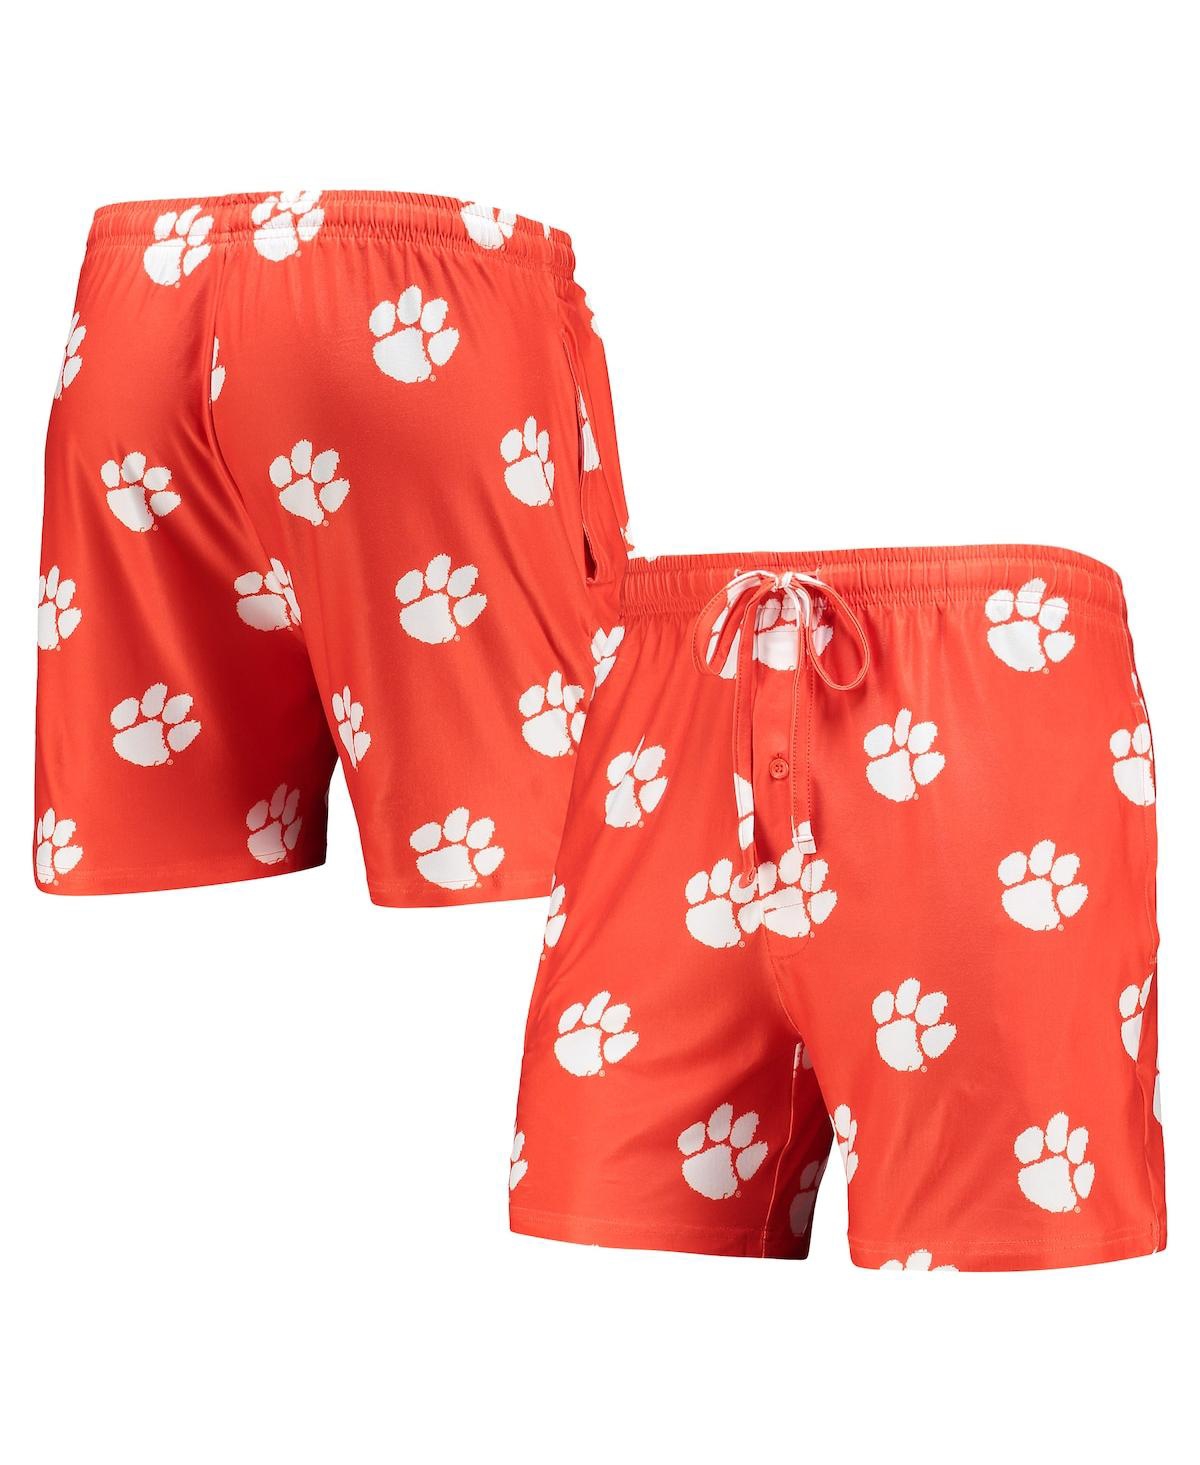 Shop Concepts Sport Men's  Orange Clemson Tigers Flagship Allover Print Jam Shorts